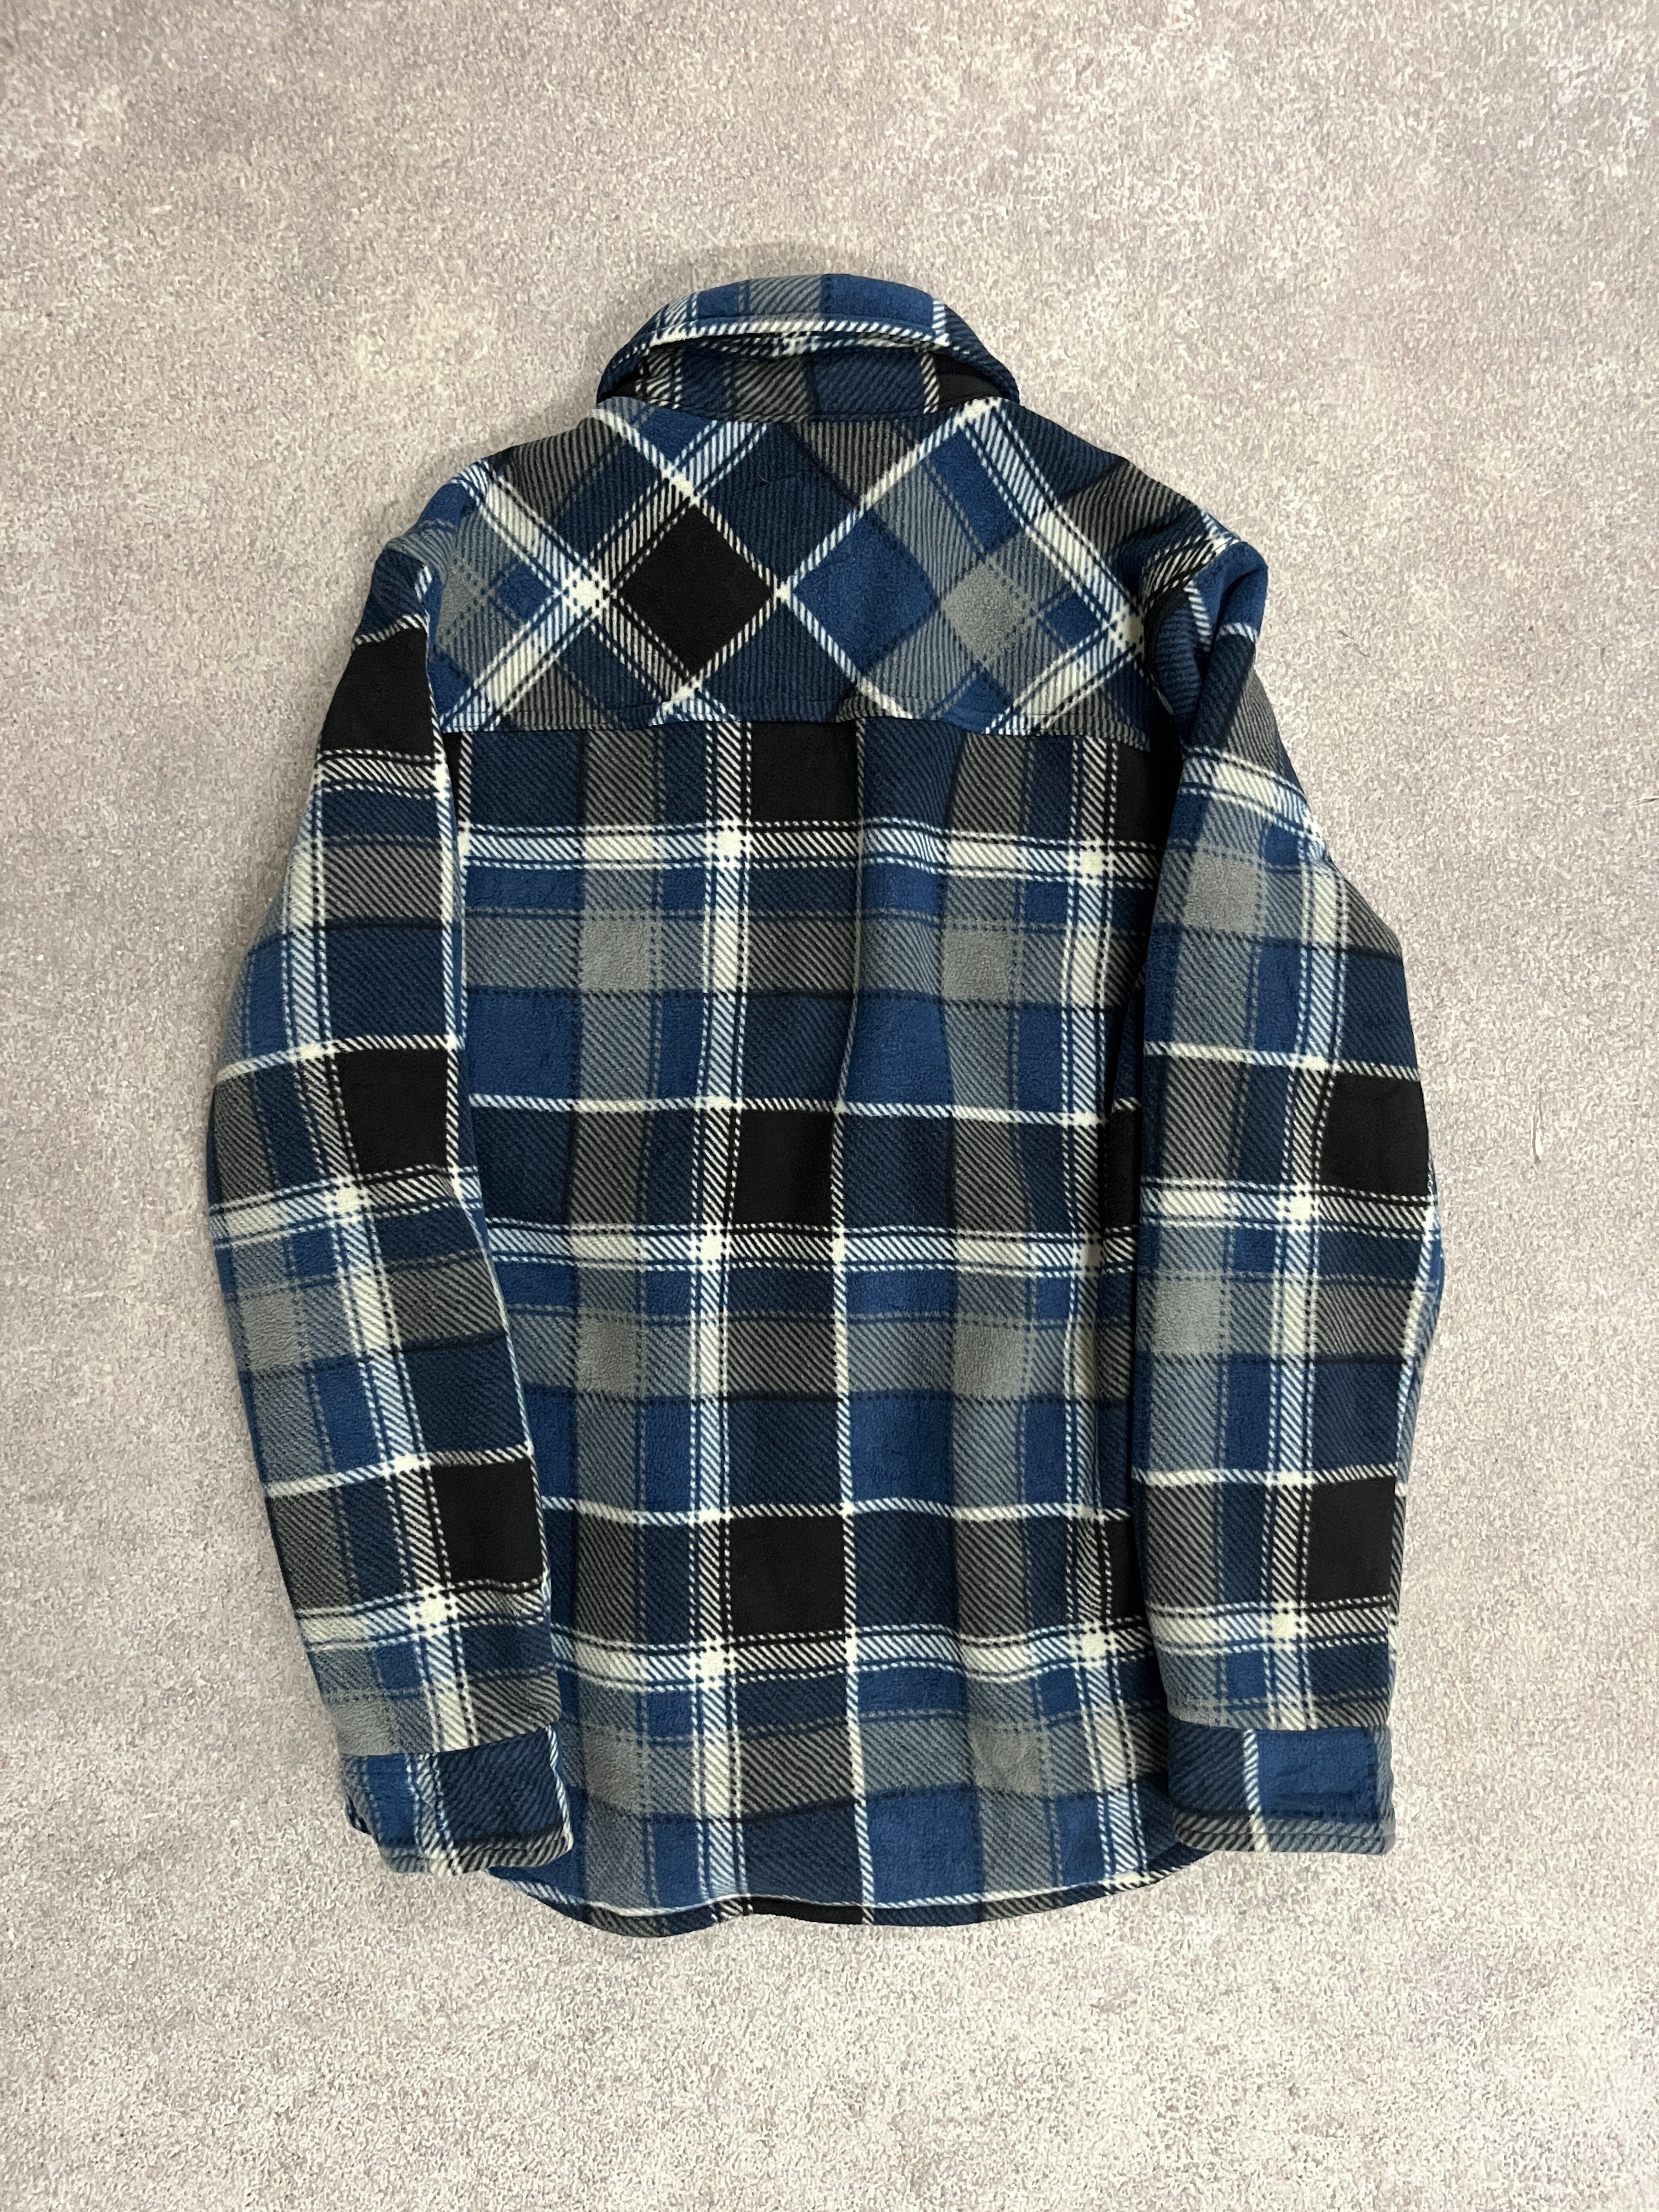 Vintage Lined Fleece Shirt Blue // Medium - RHAGHOUSE VINTAGE